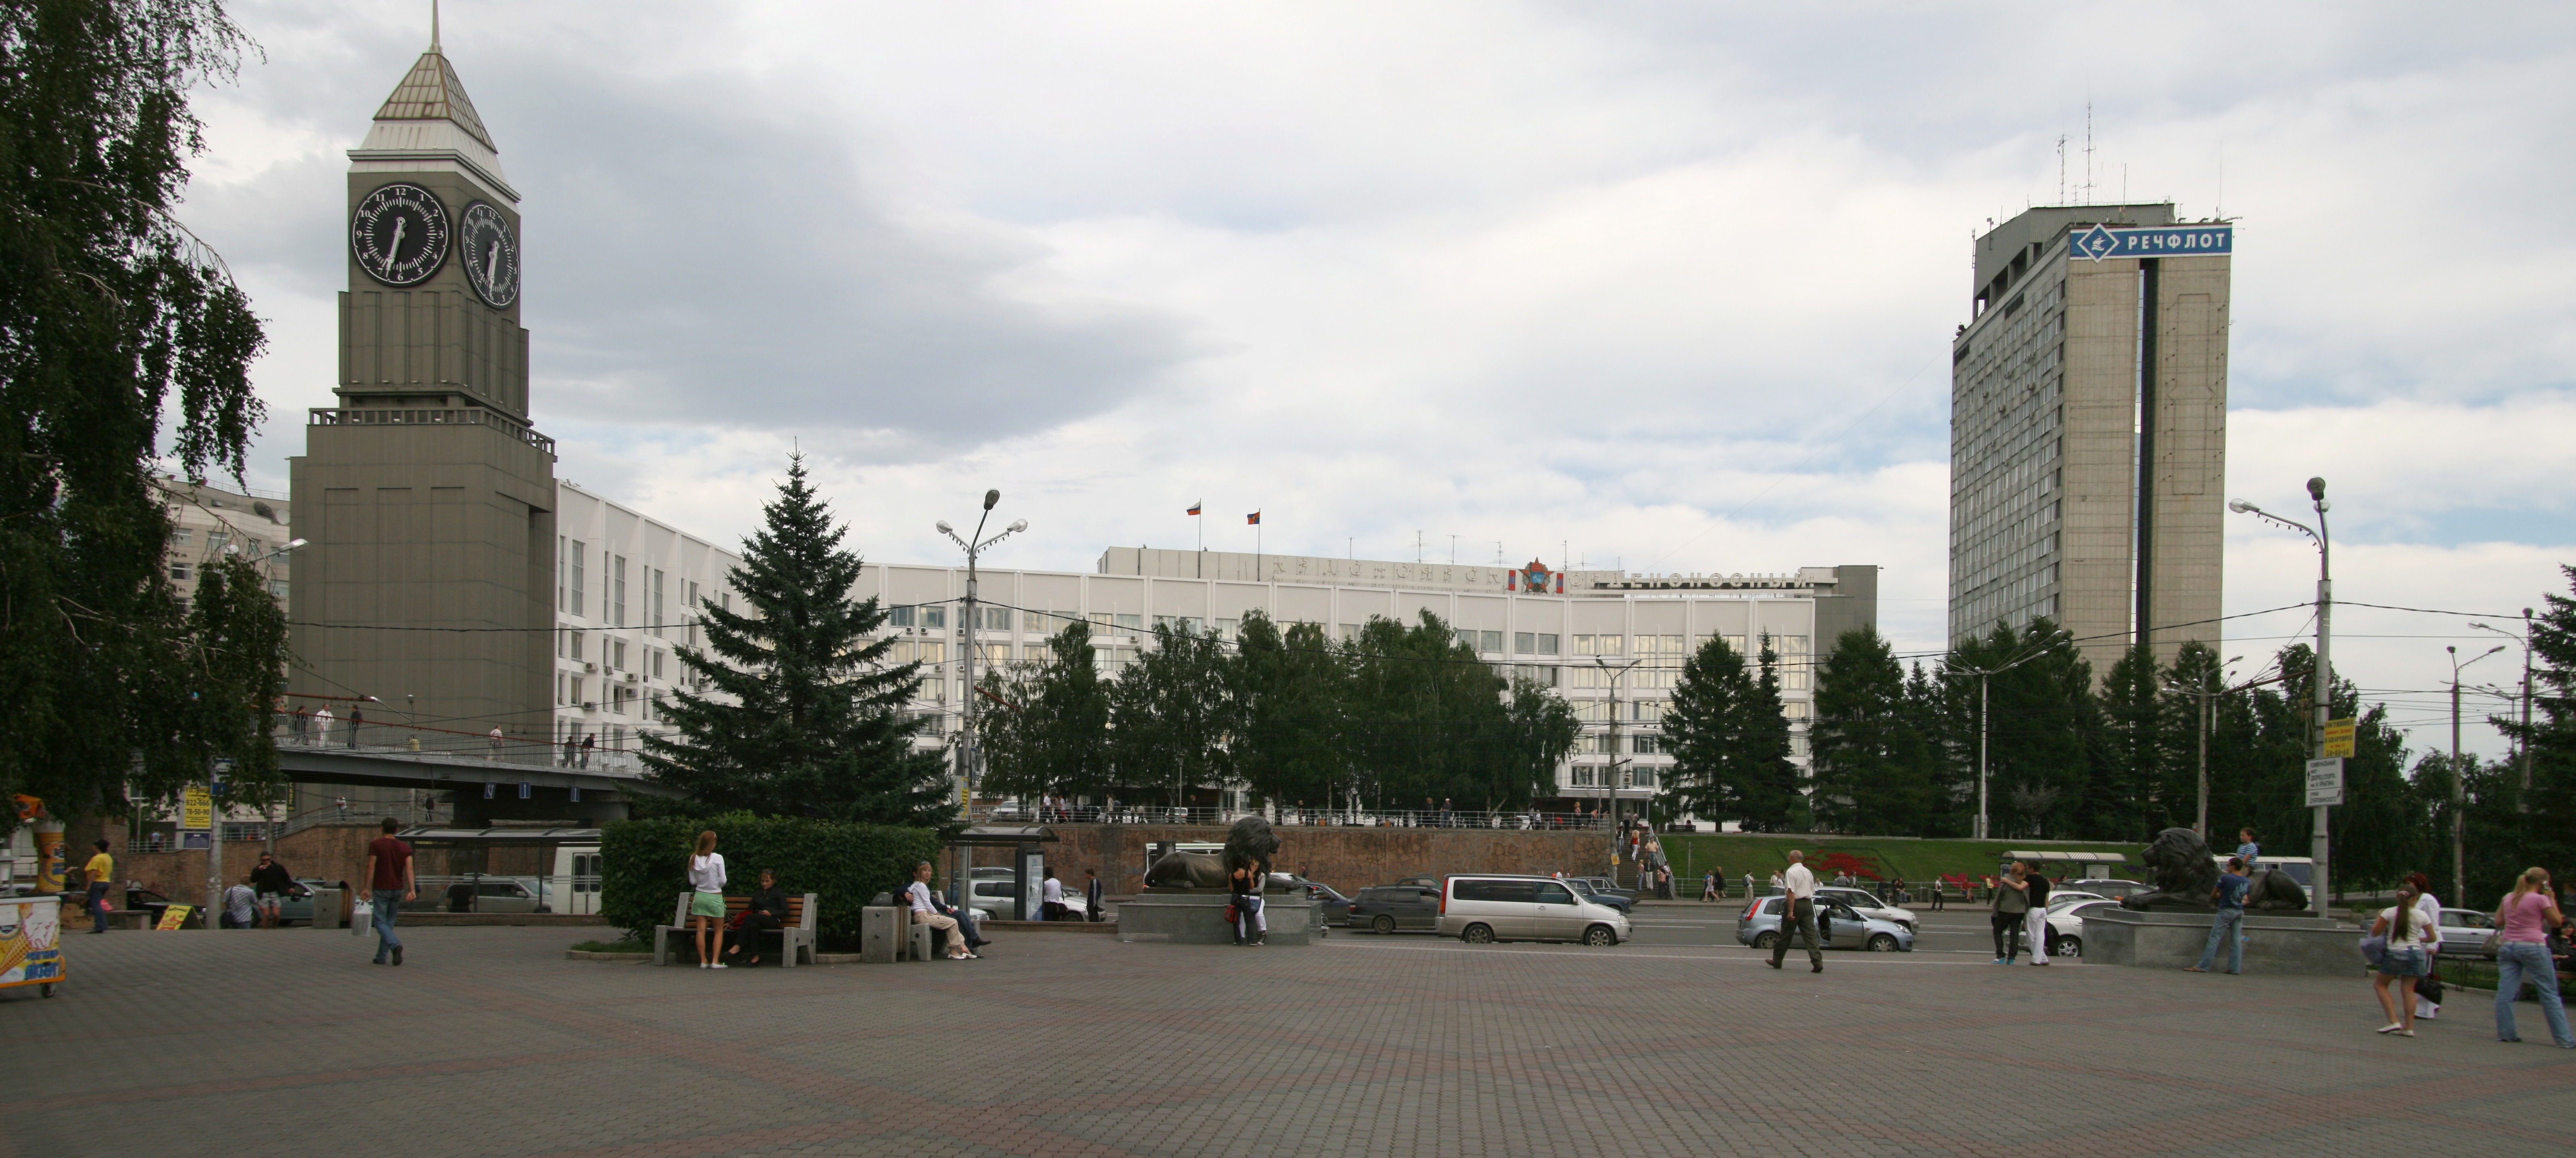 Krasnoiarsk - Hotel de Ville - panorama
Mots-clés: panorama